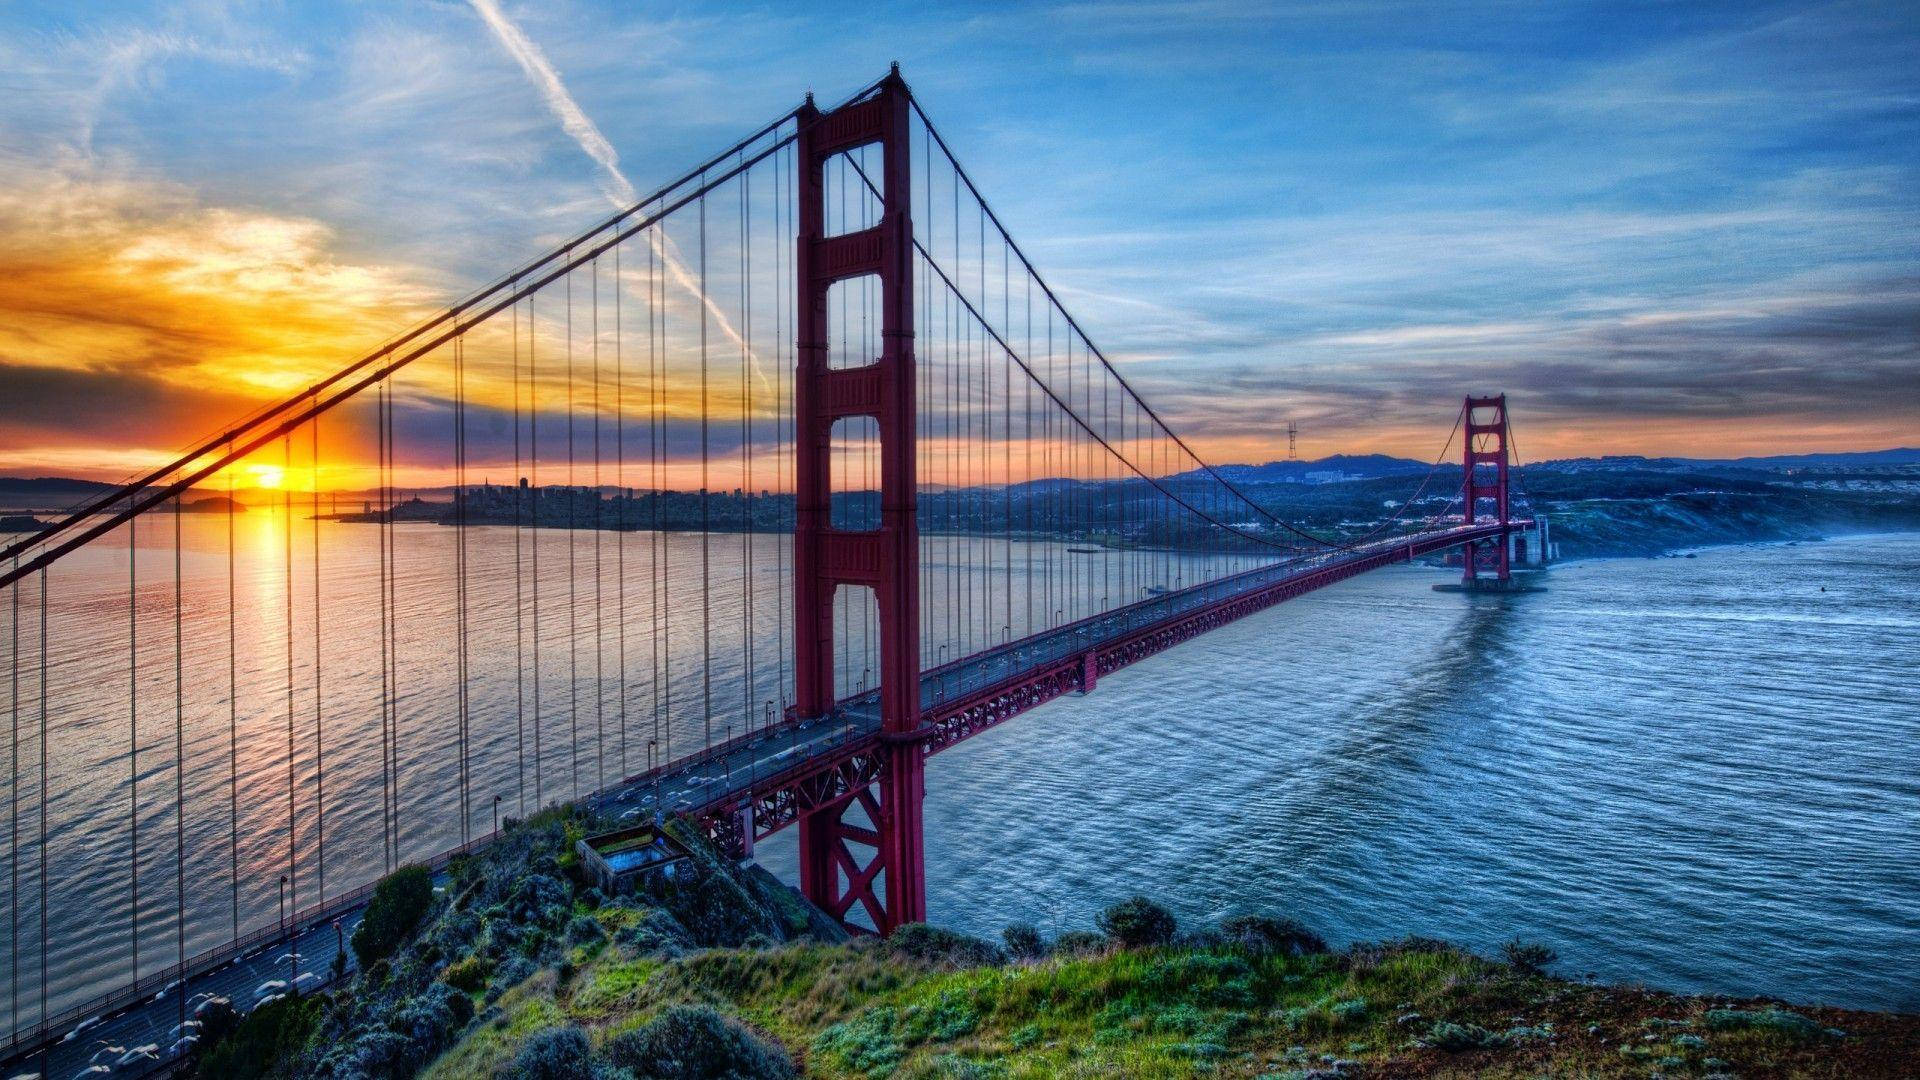 Golden Gate Bridge 1920 X 1080 Wallpaper